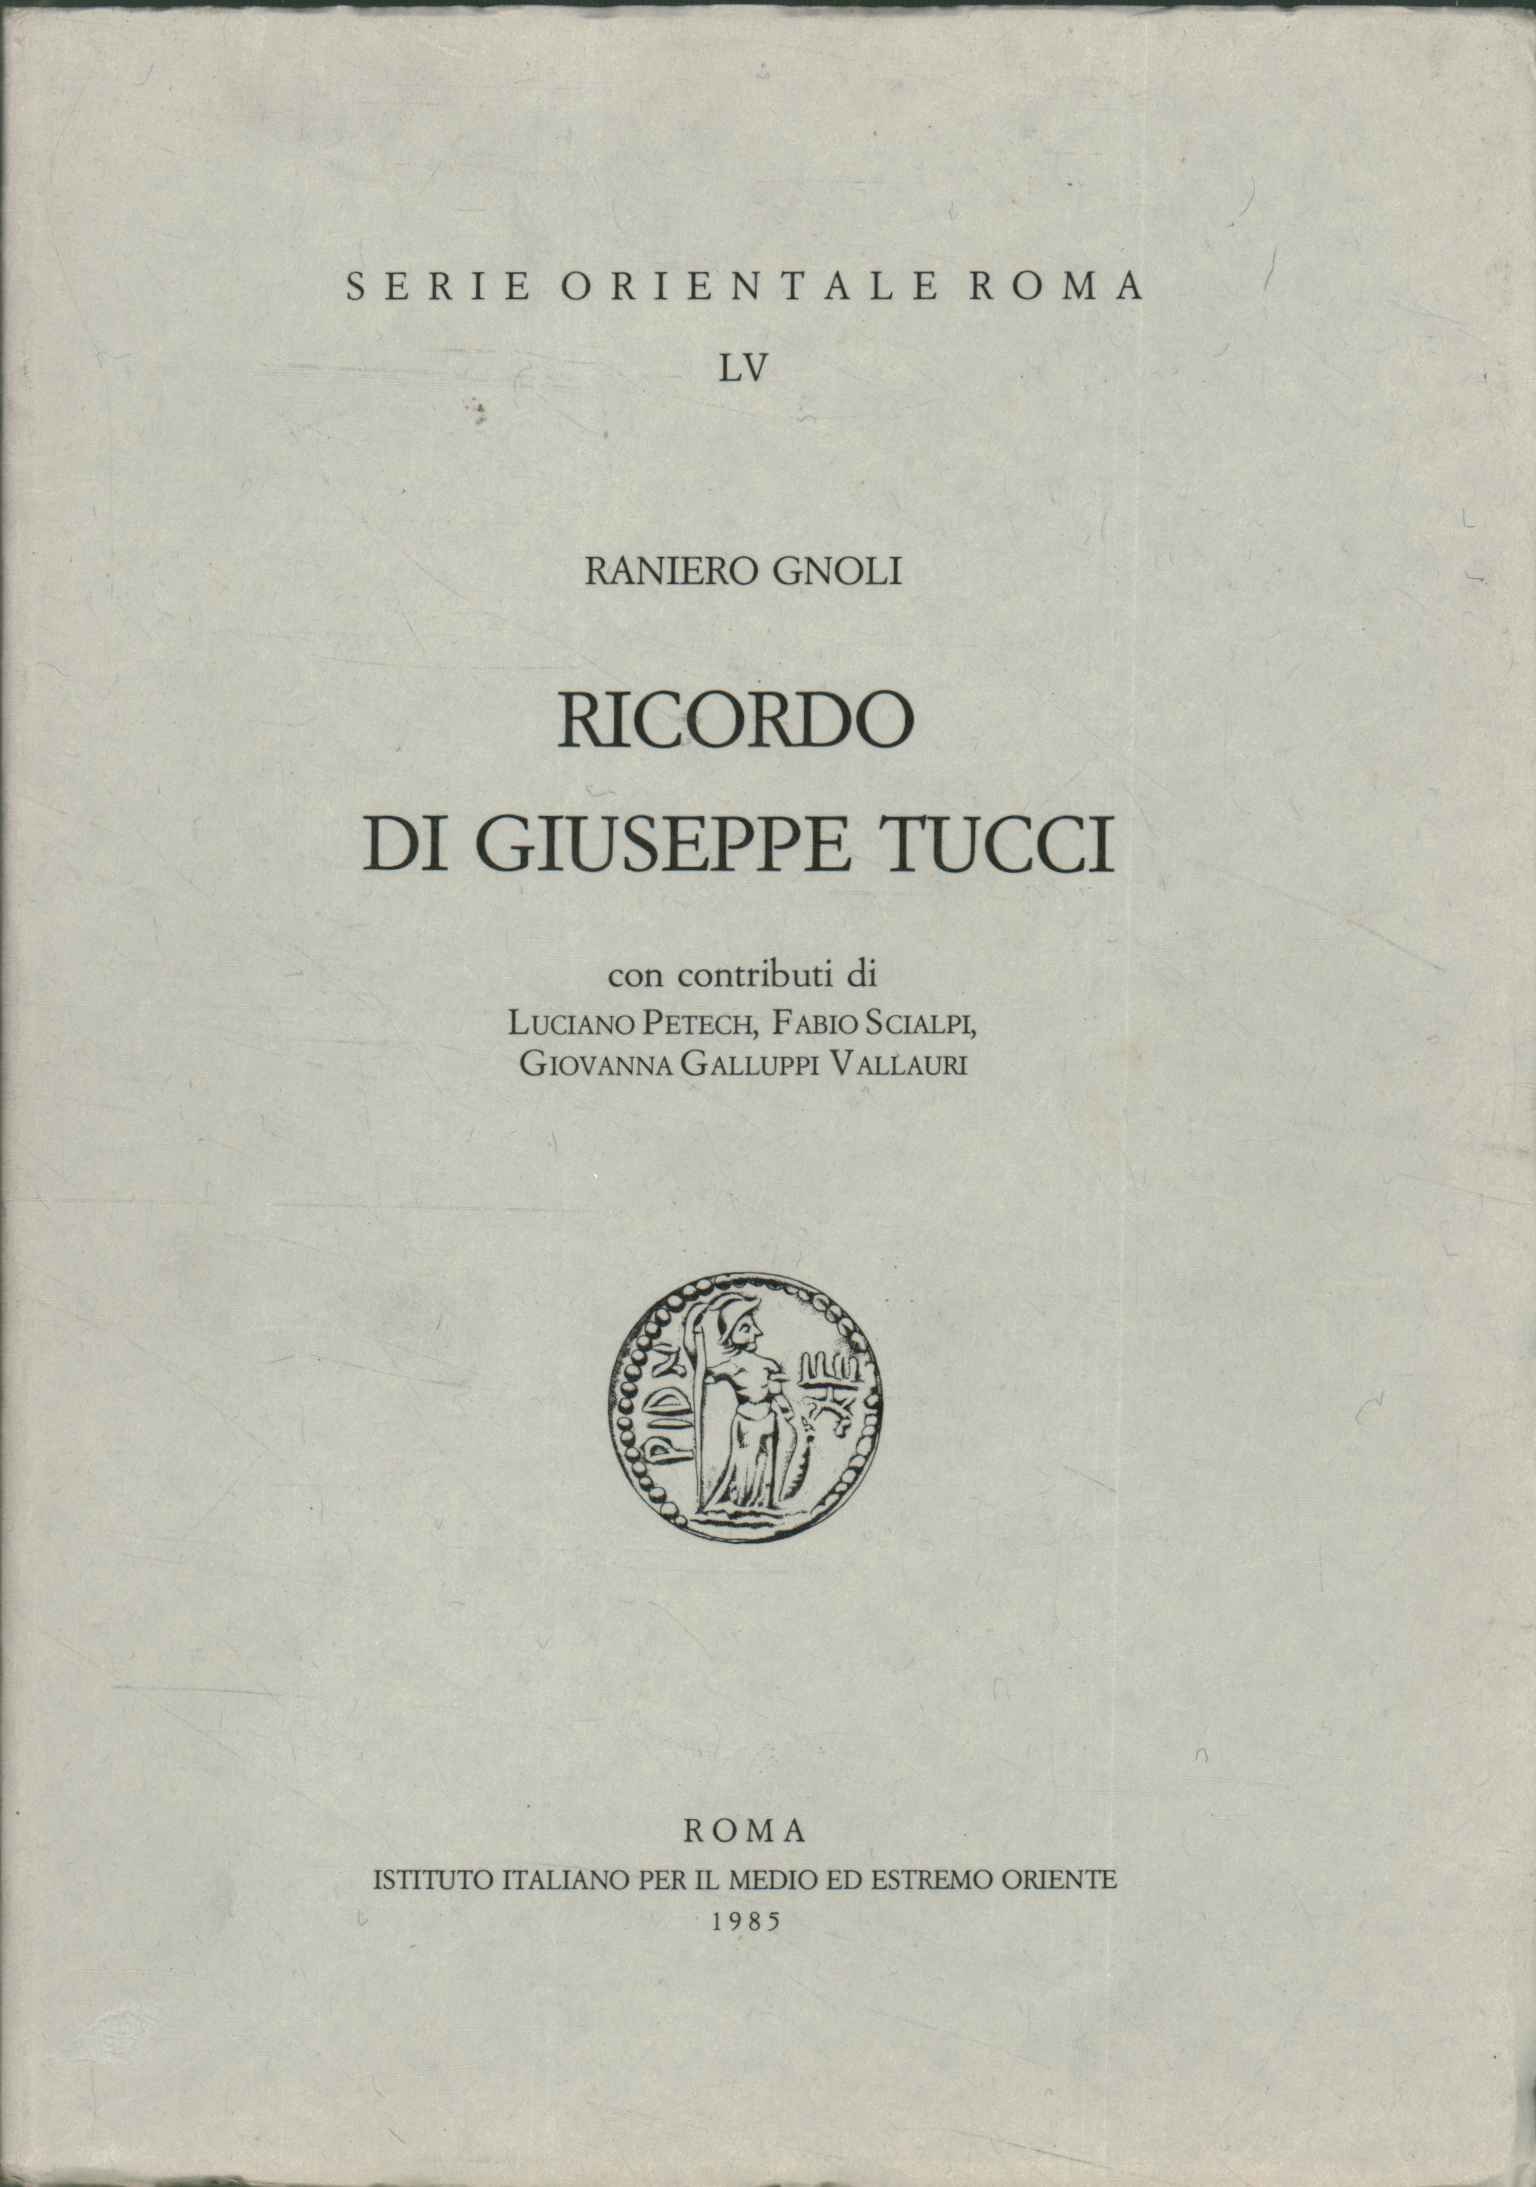 Memory of Giuseppe Tucci